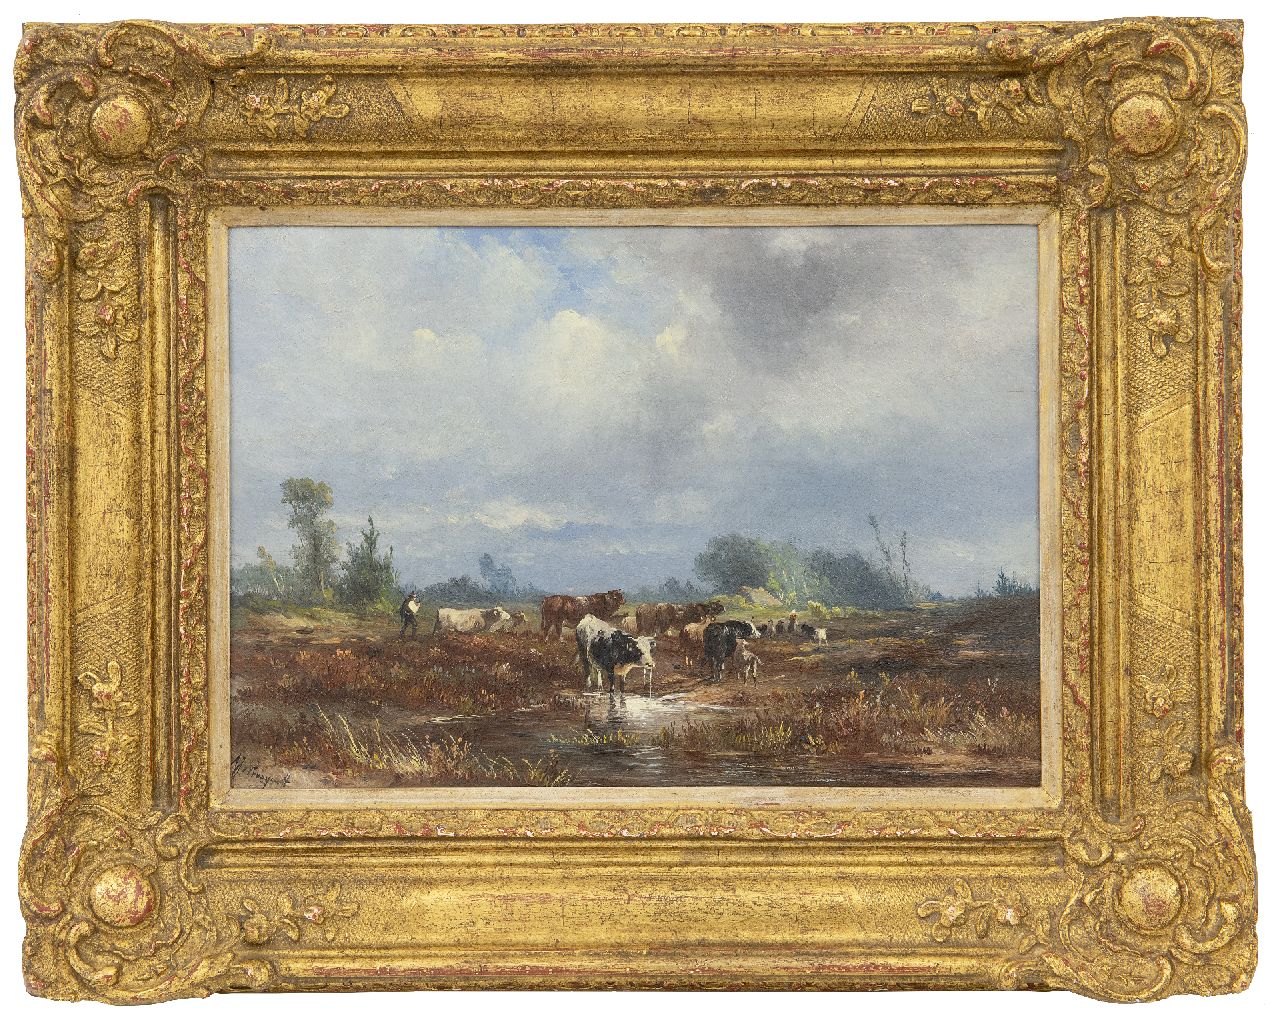 Prooijen A.J. van | Albert Jurardus van Prooijen | Paintings offered for sale | Heathland with shepherds and flock, oil on panel 19.7 x 28.5 cm, signed l.l.